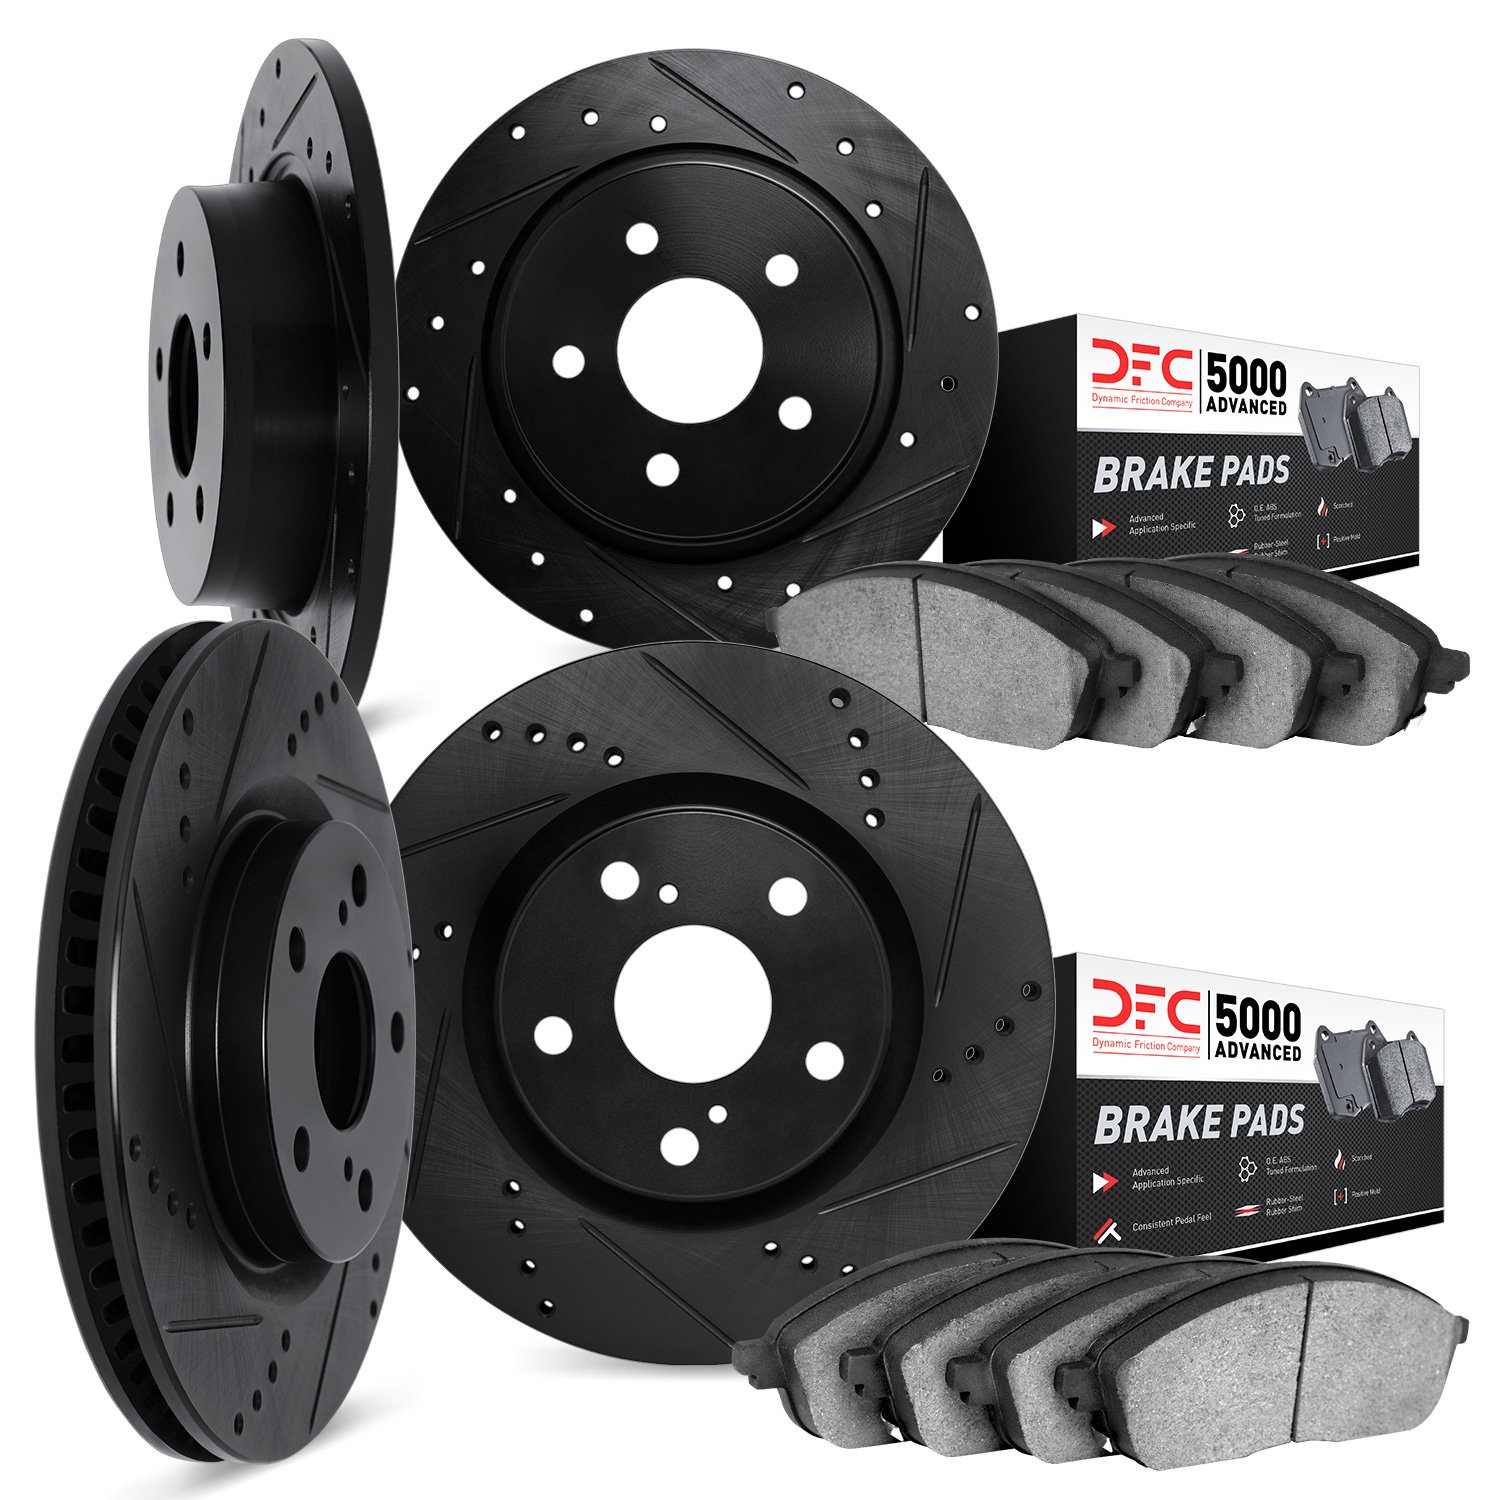 8504-39027 Drilled/Slotted Brake Rotors w/5000 Advanced Brake Pads Kit [Black], 2016-2017 Mopar, Position: Front and Rear